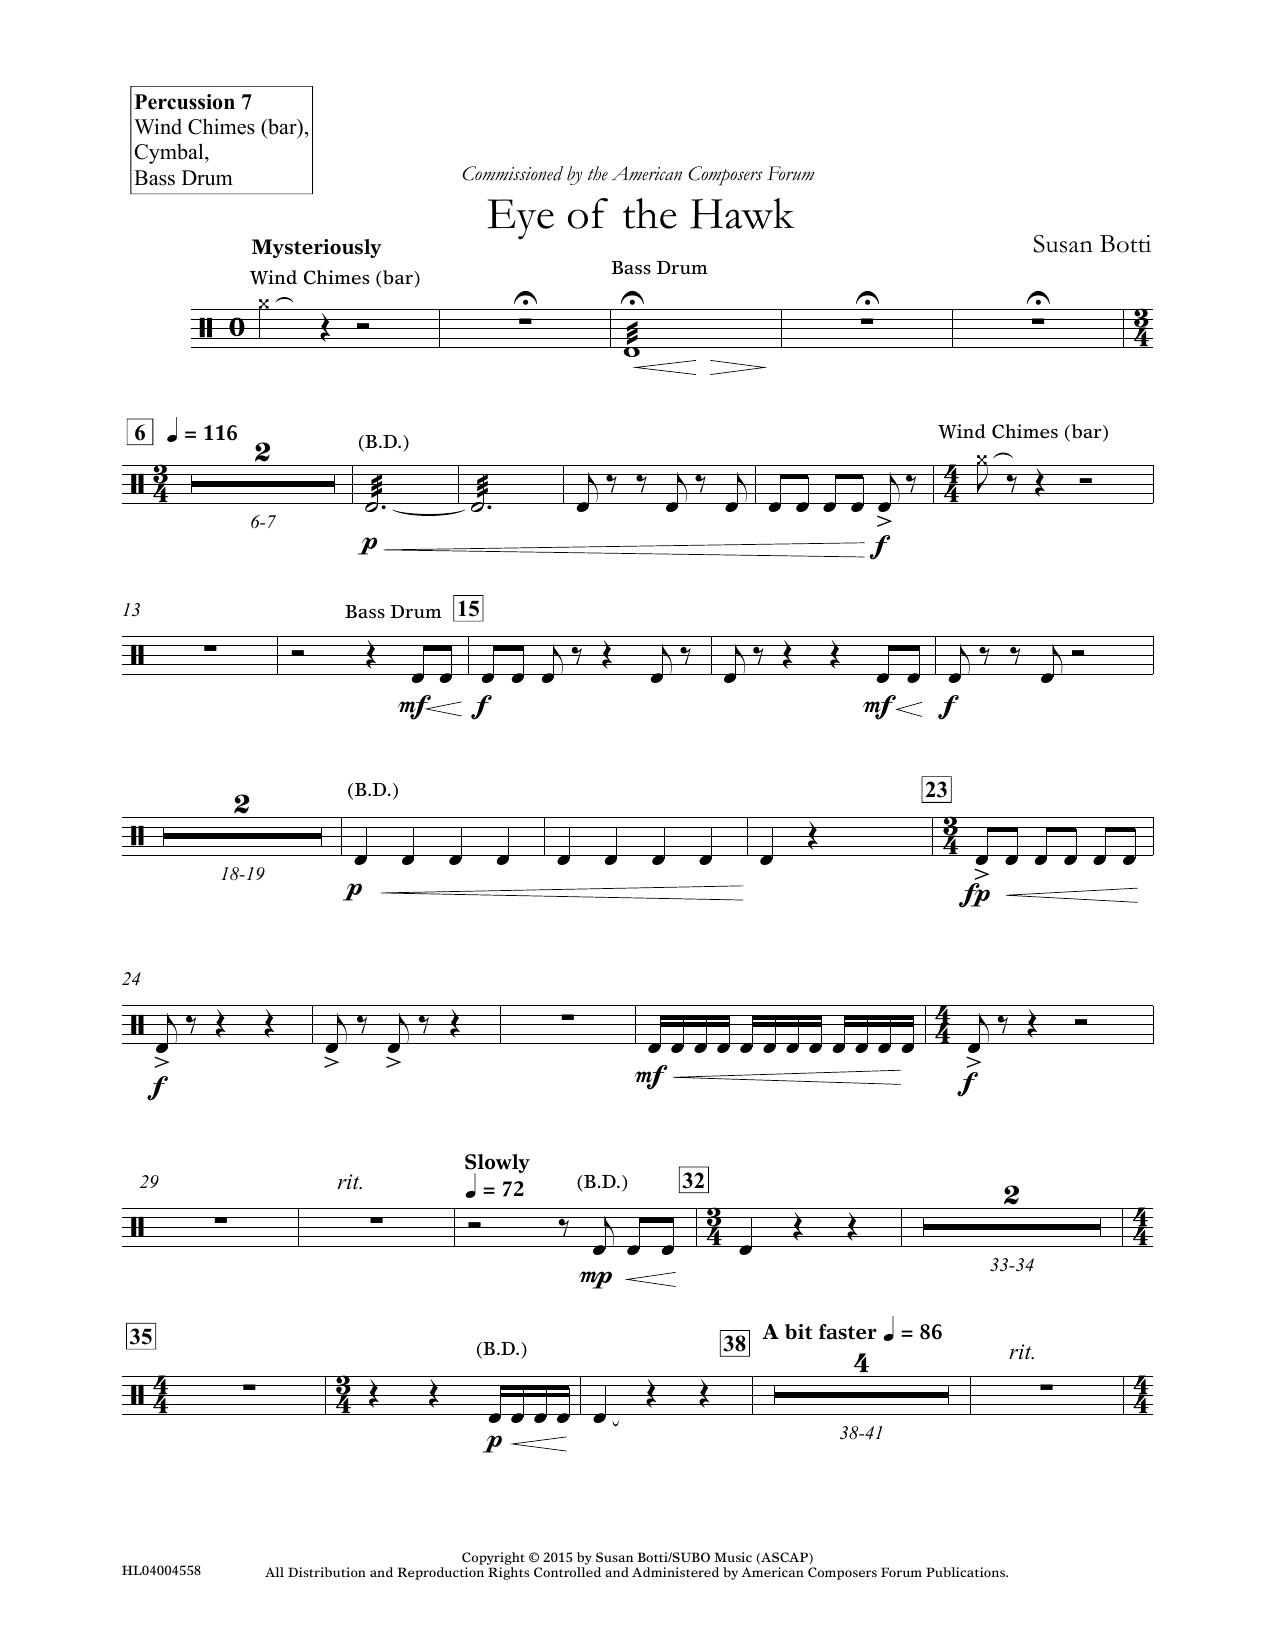 Download Susan Botti Eye of the Hawk - Percussion 7 Sheet Music